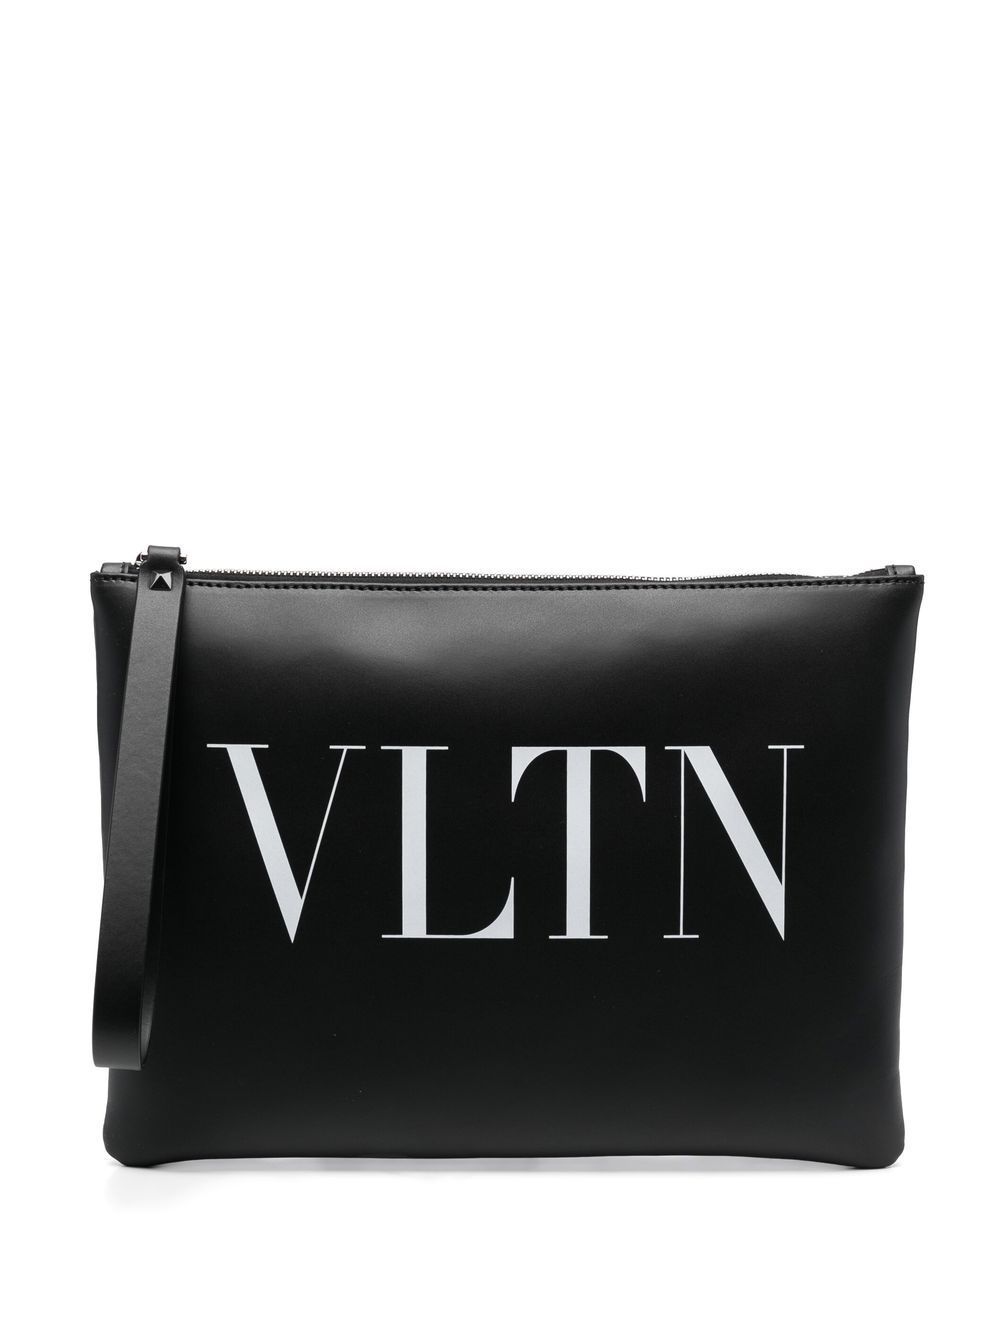 Shop Valentino Garavani VLTN-print clutch bag with Express Delivery ...